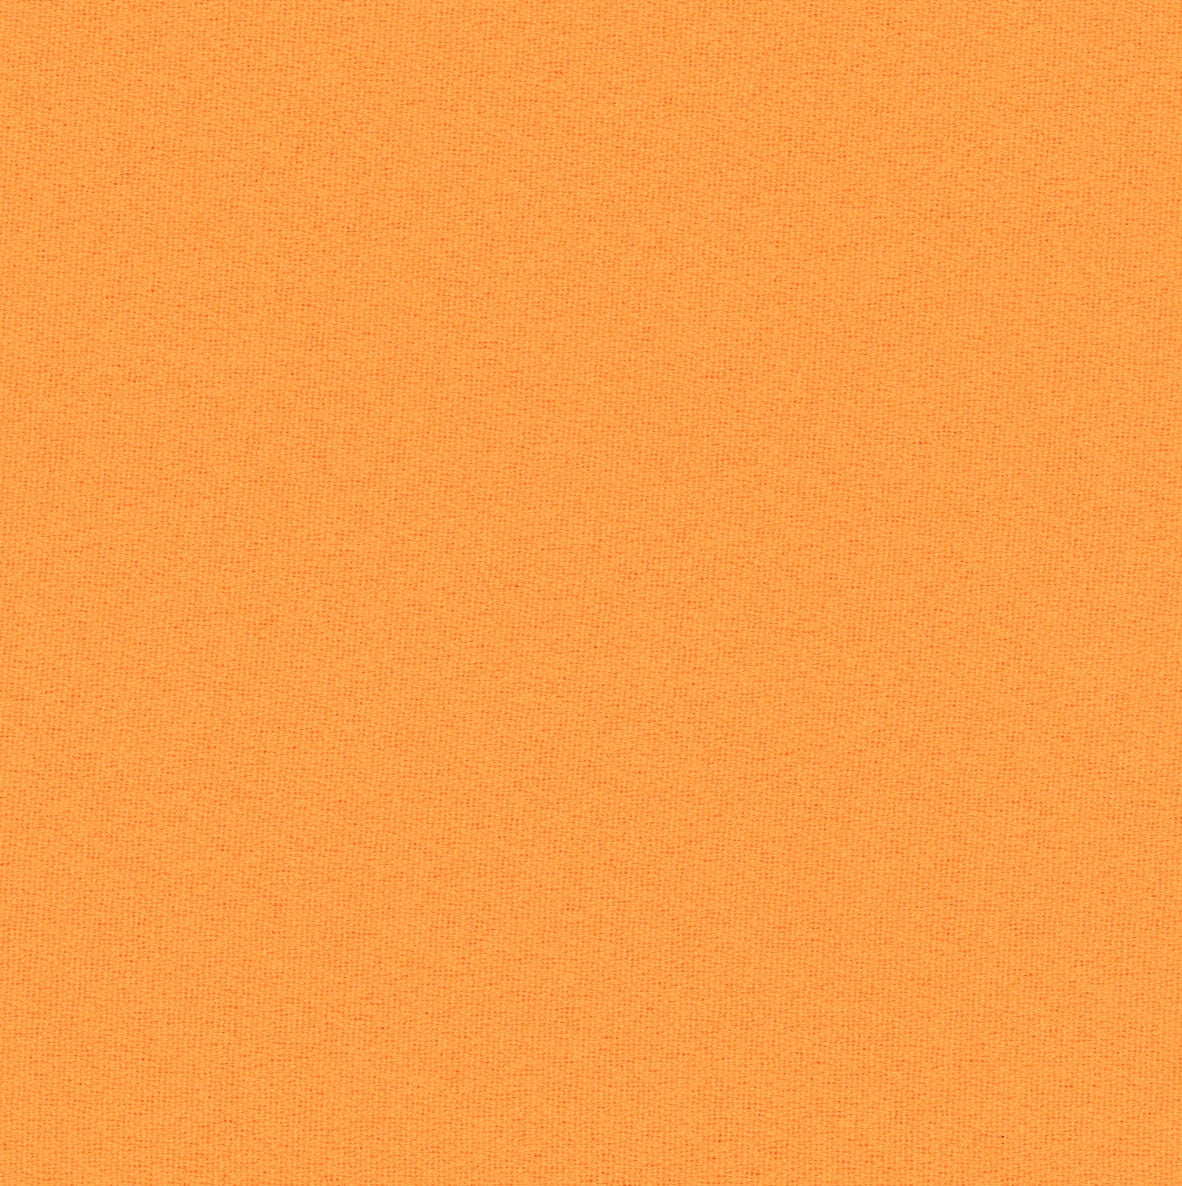 35001-03 Carrot Orange Crepe Plain Dyed Blend 315g/yd 54" crepe orange plain dyed polyester woven Solid Color - knit fabric - woven fabric - fabric company - fabric wholesale - fabric b2b - fabric factory - high quality fabric - hong kong fabric - fabric hk - acetate fabric - cotton fabric - linen fabric - metallic fabric - nylon fabric - polyester fabric - spandex fabric - chun wing hing - cwh hk - fabric worldwide ship - 針織布 - 梳織布 - 布料公司- 布料批發 - 香港布料 - 秦榮興